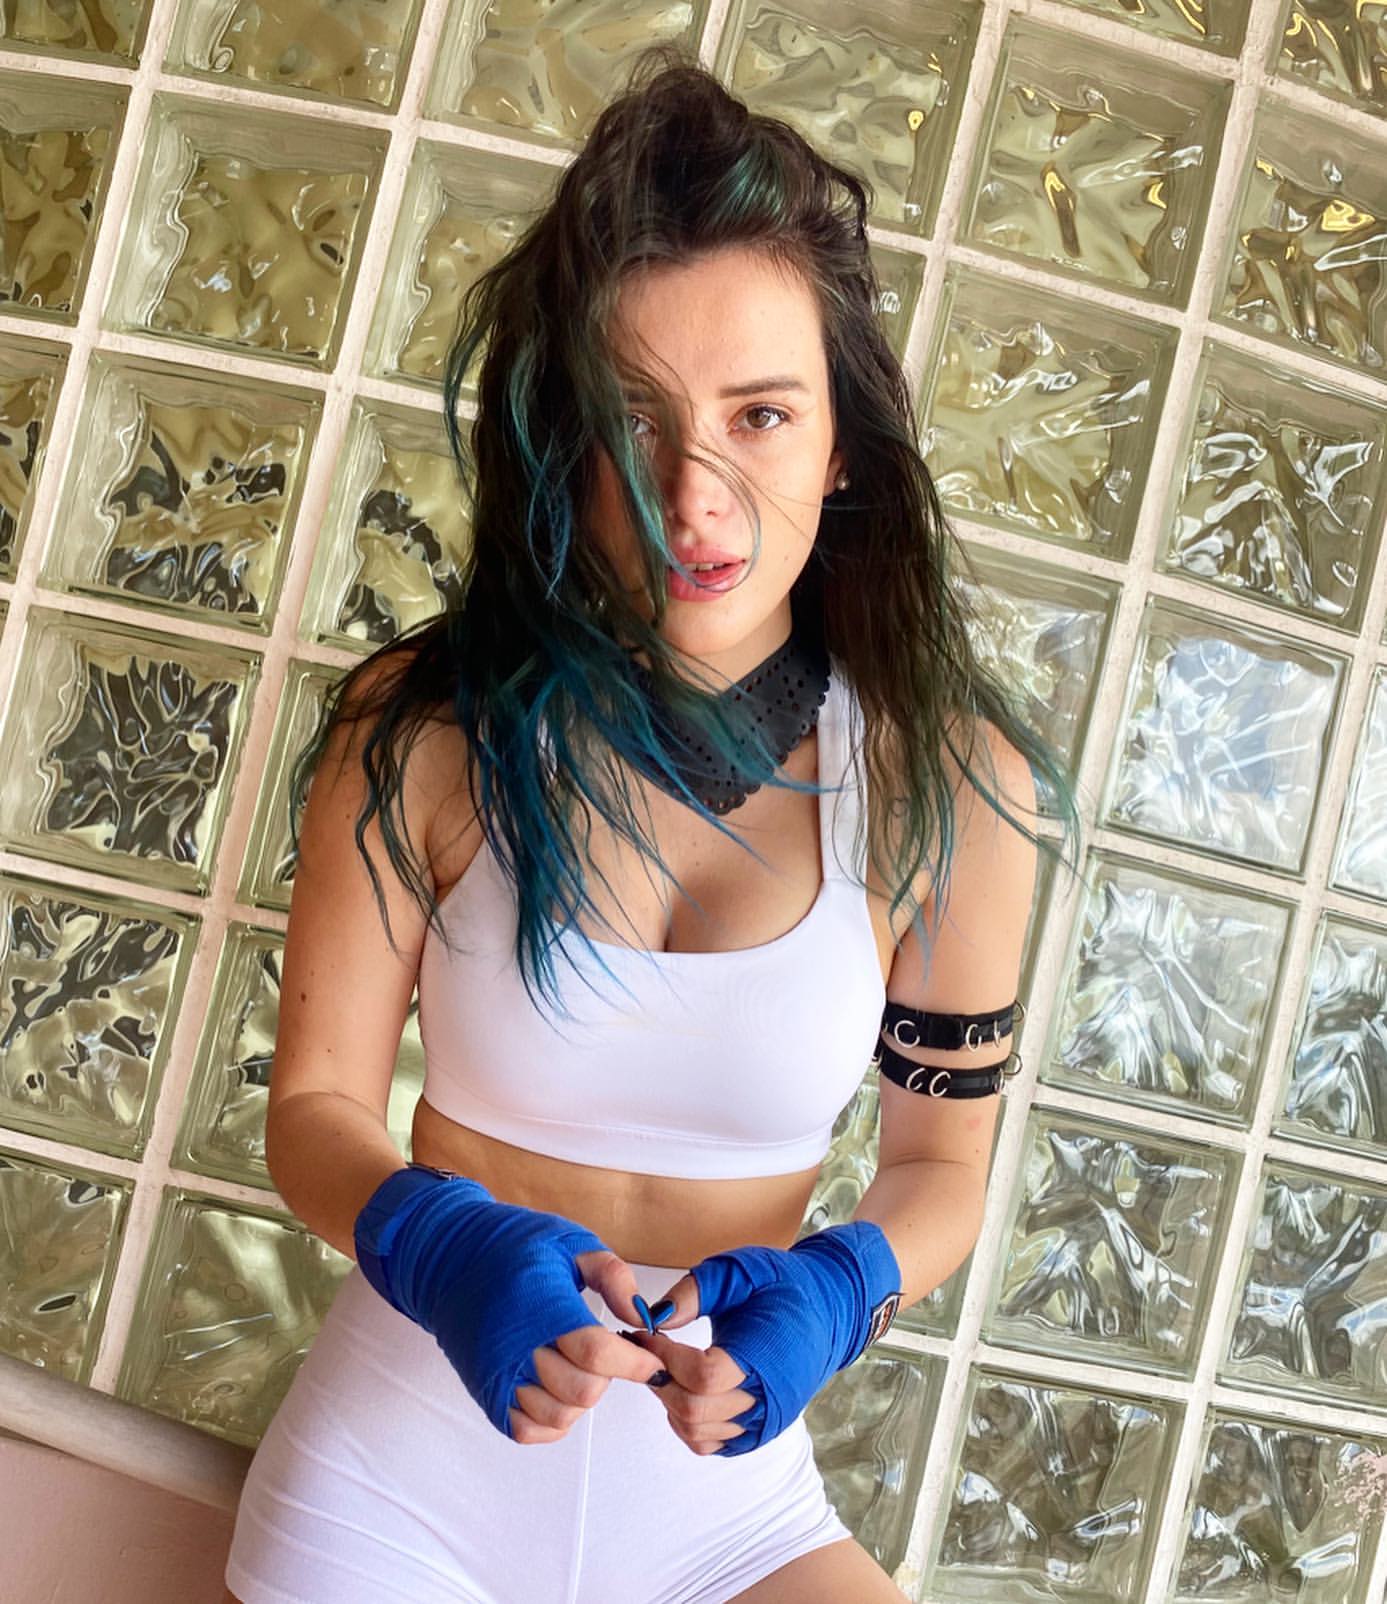 Fotos n°2 : Bella Thorne est lista para luchar